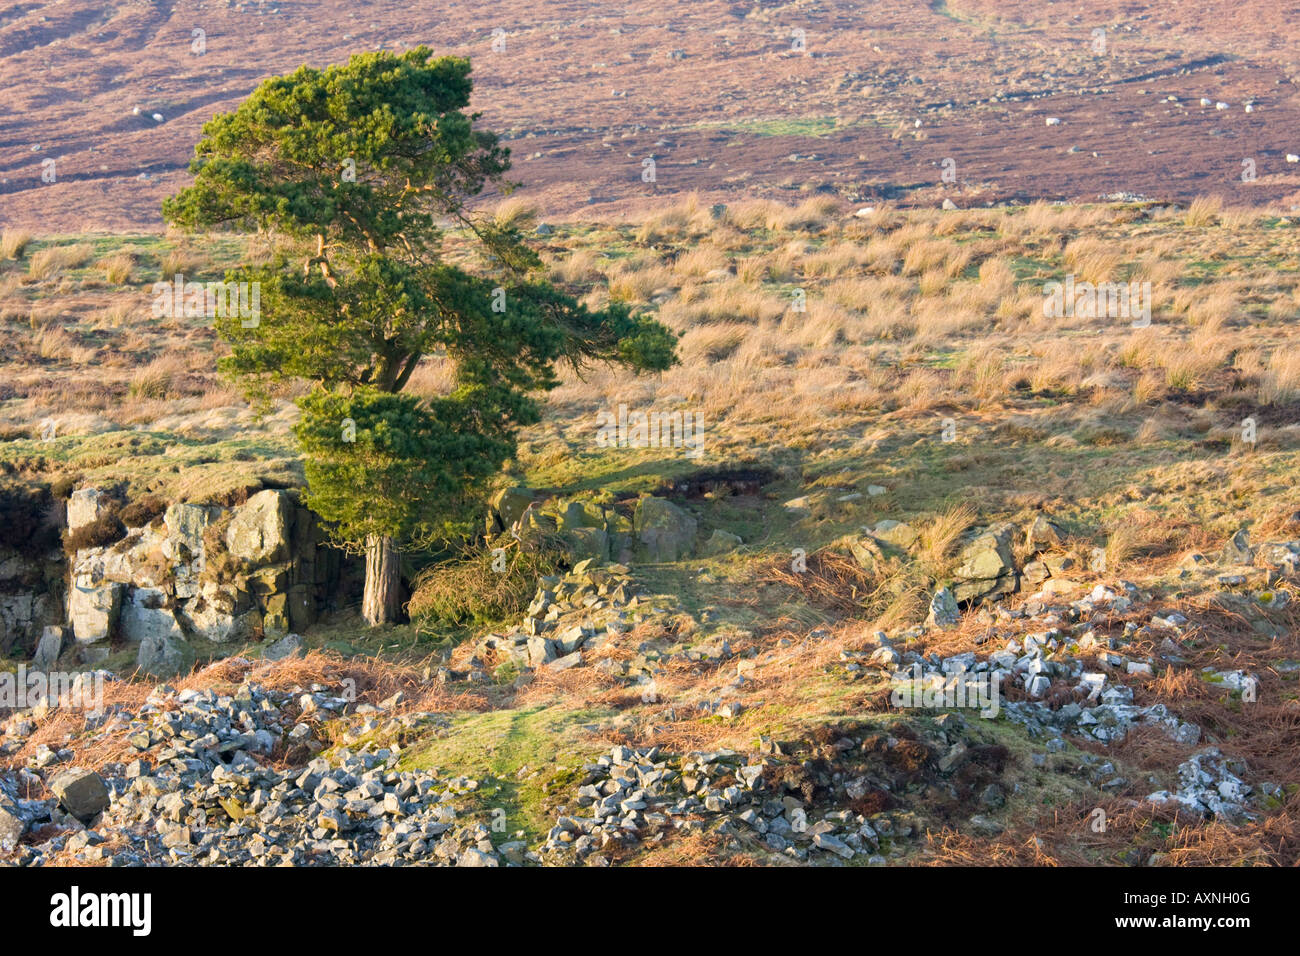 Tree, rocks and moorland, Northumberland UK Stock Photo